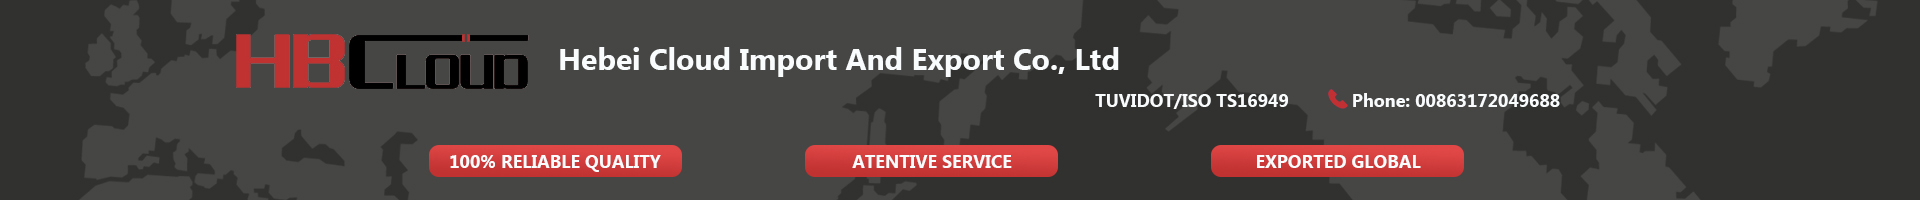 Hebei Cloud Import And Export Co., Ltd.